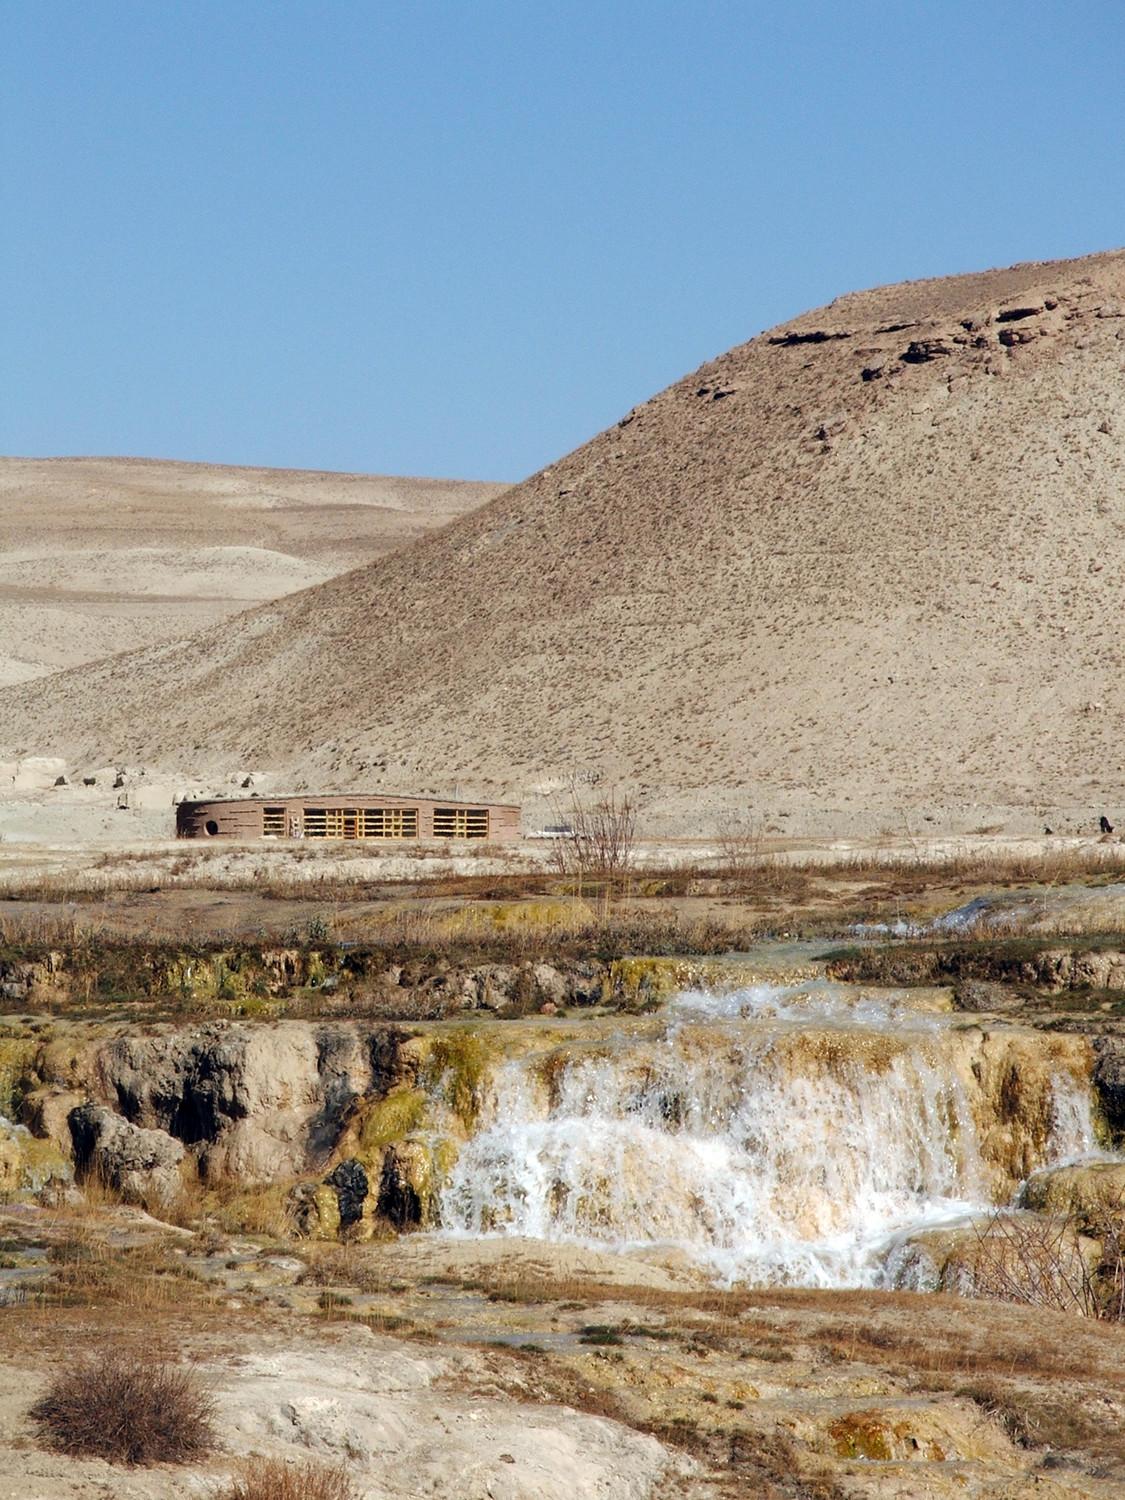 Band-i-Amir National Park Amenities